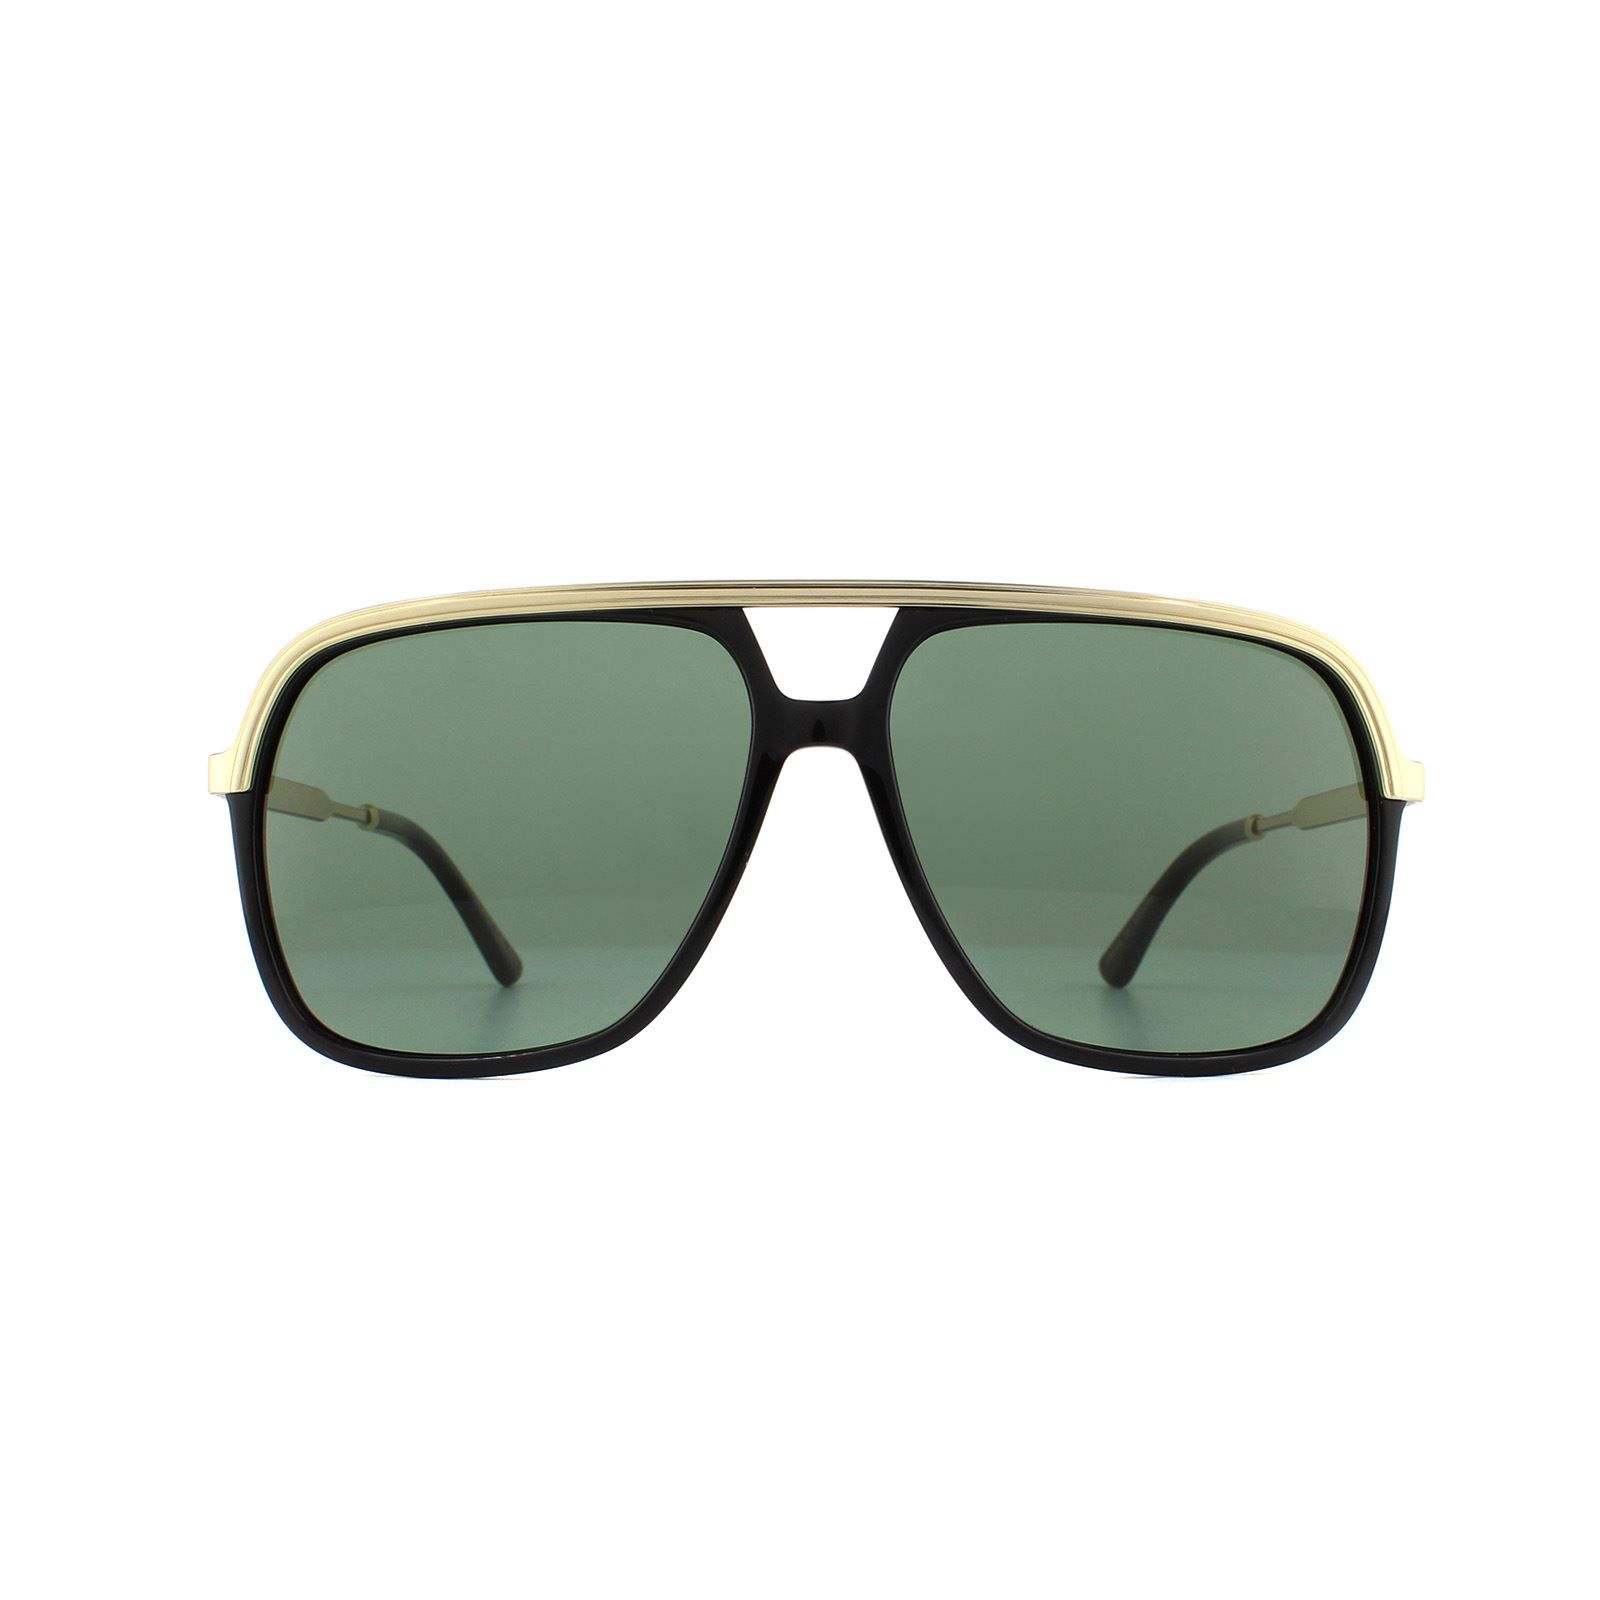 Gucci Sunglasses Gg0200s 001 Black And Gold Green